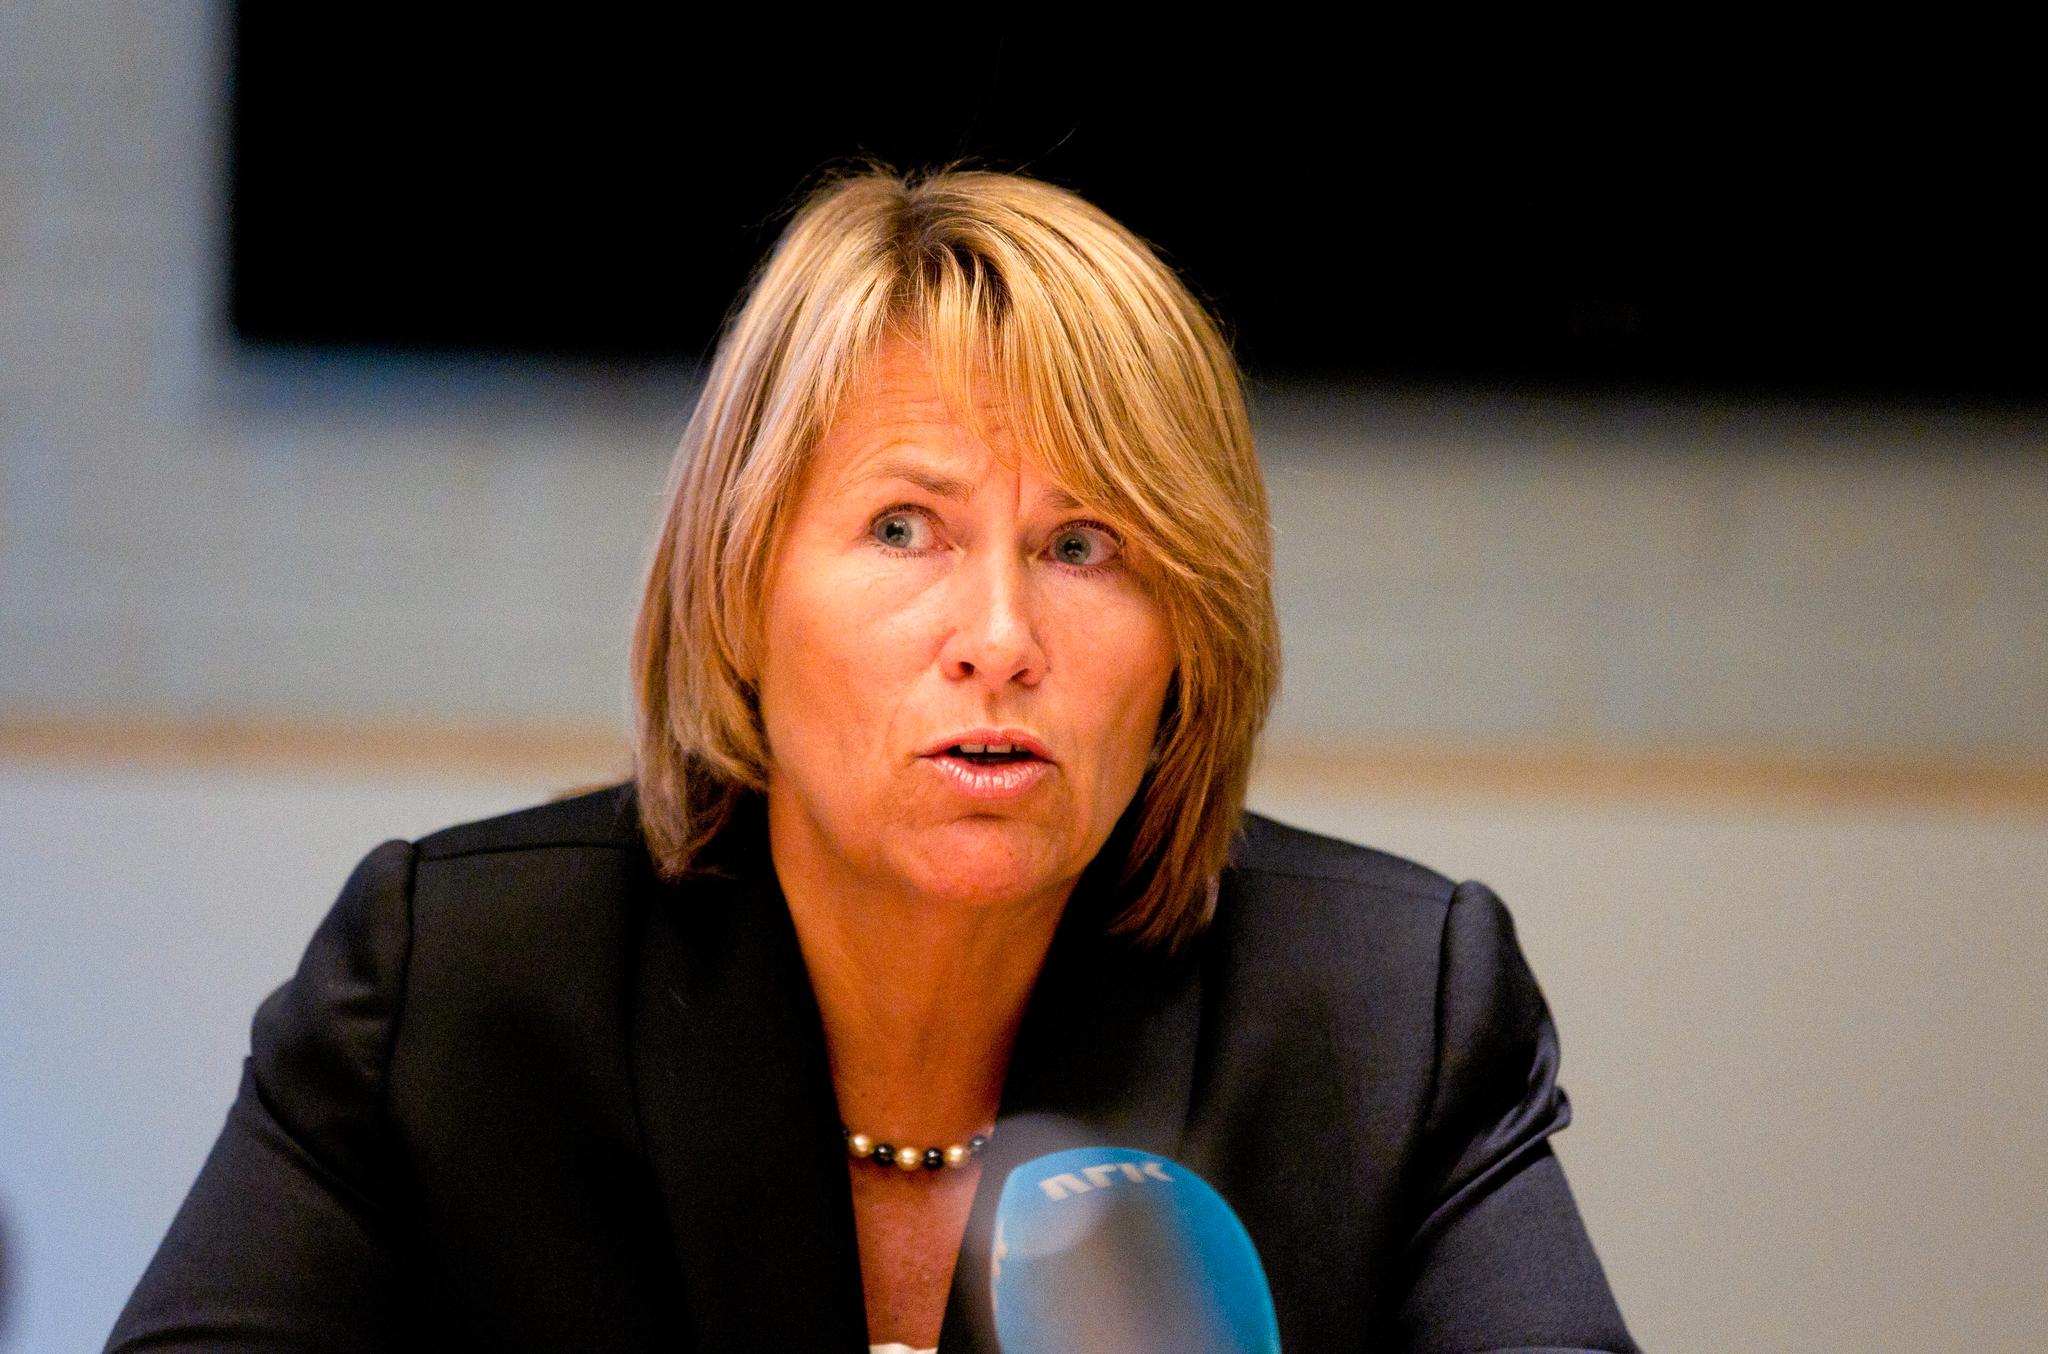 Grete Fremo tar over som justisminister etter Knut Storberget, ifølge NRK.